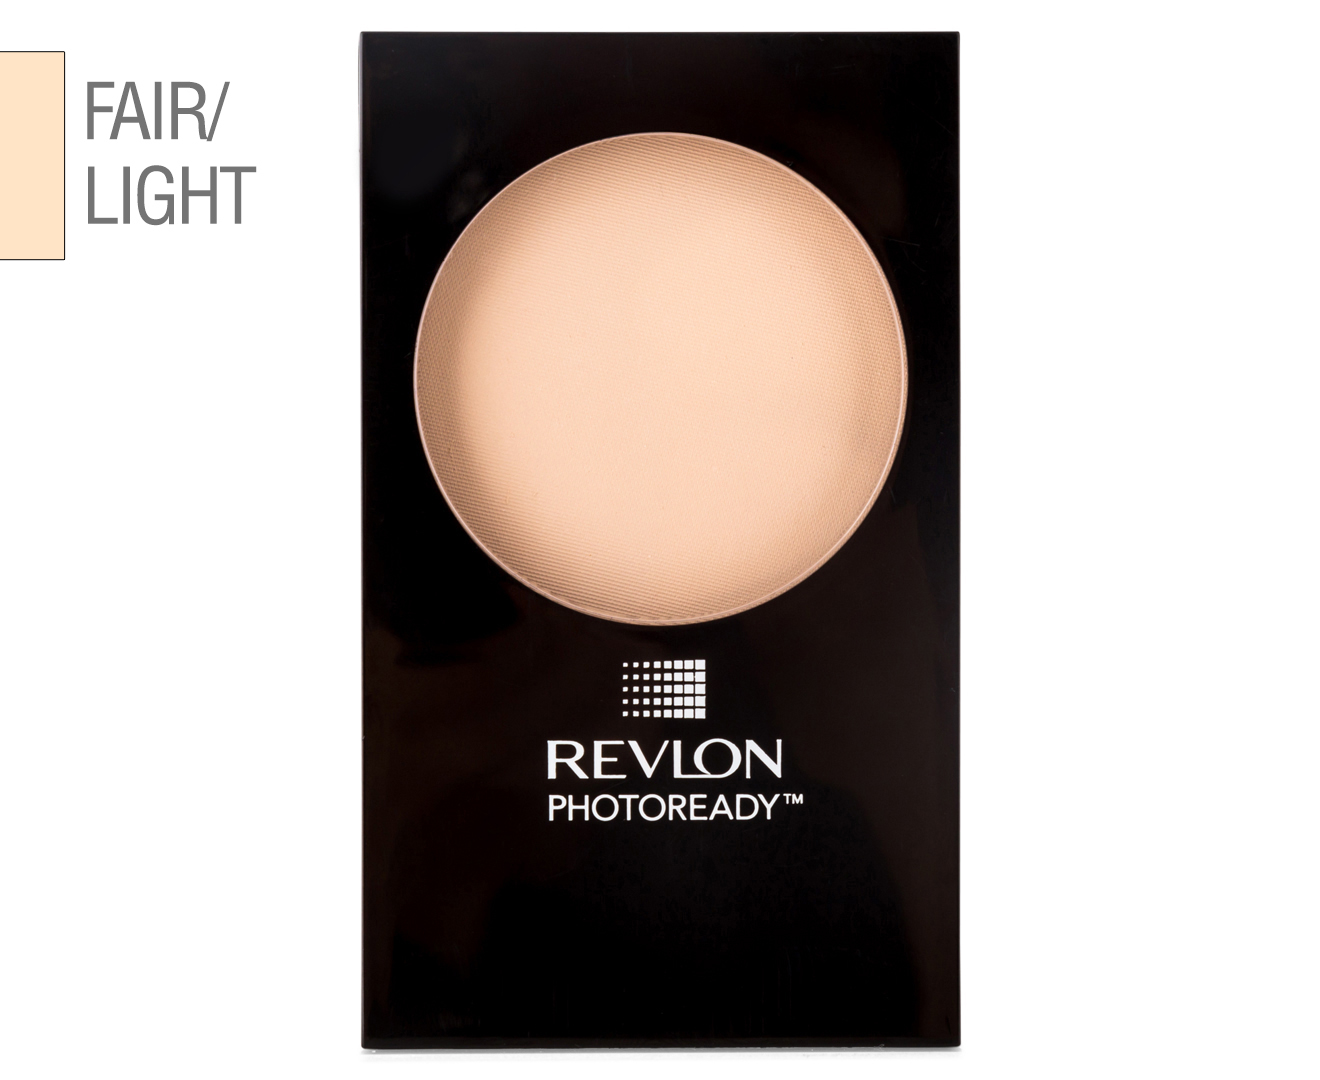 Revlon PhotoReady Powder - Fair/Light